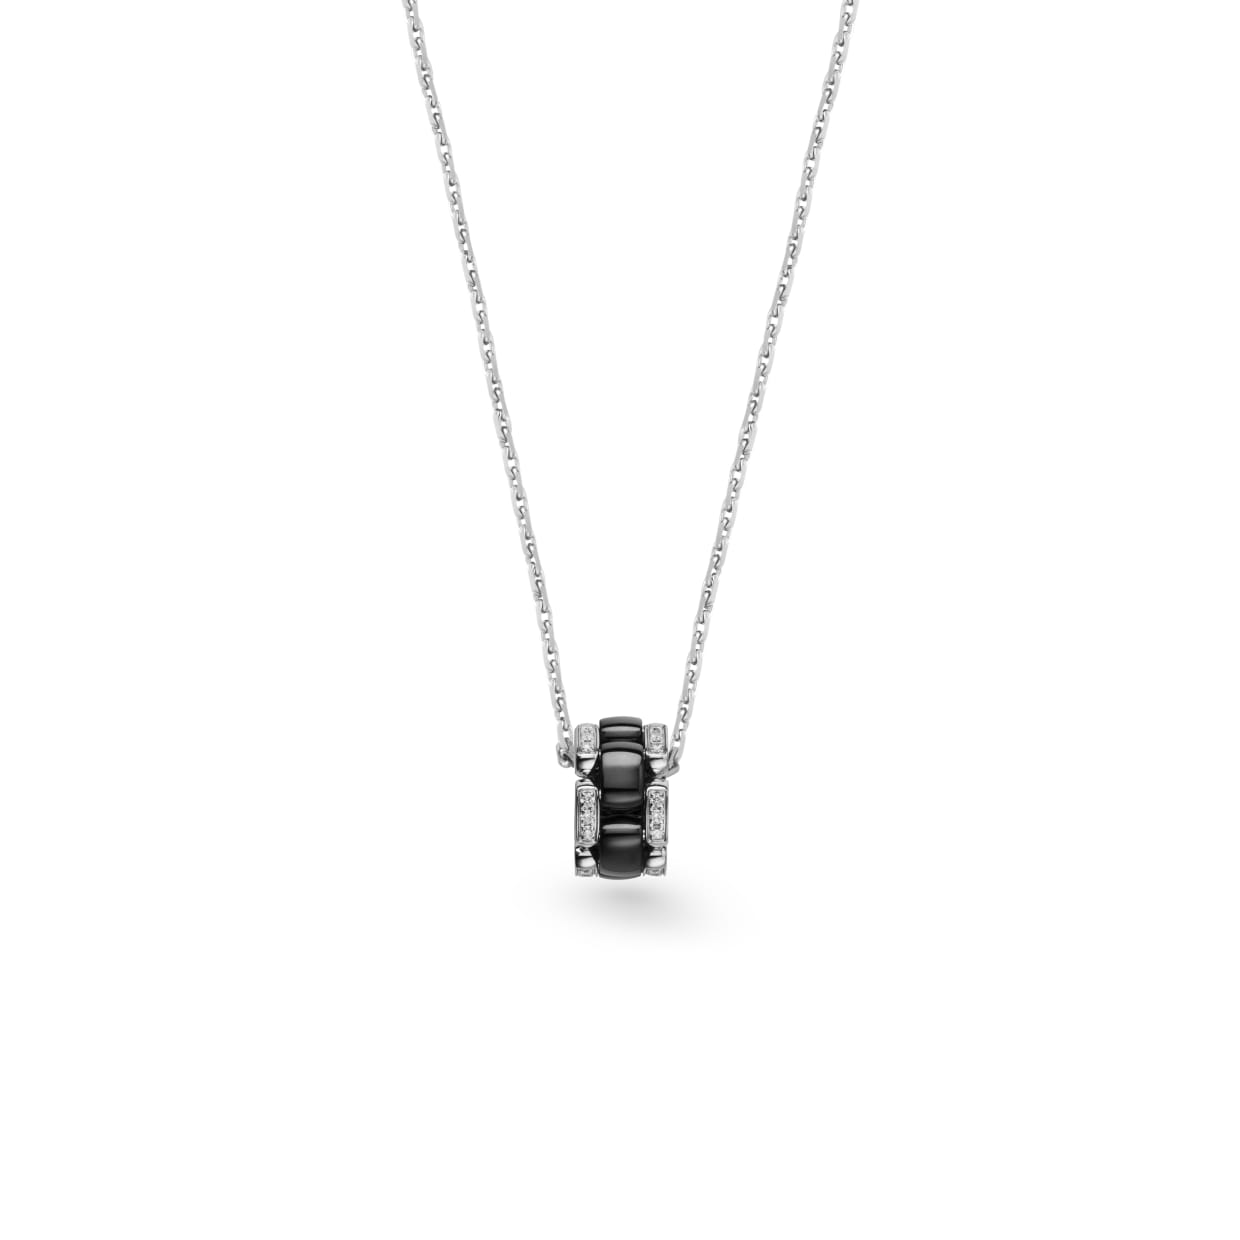 Wholesale OEM necklace in 18K white gold, diamonds, black ceramic OEM/ODM Jewelry design your jewelry